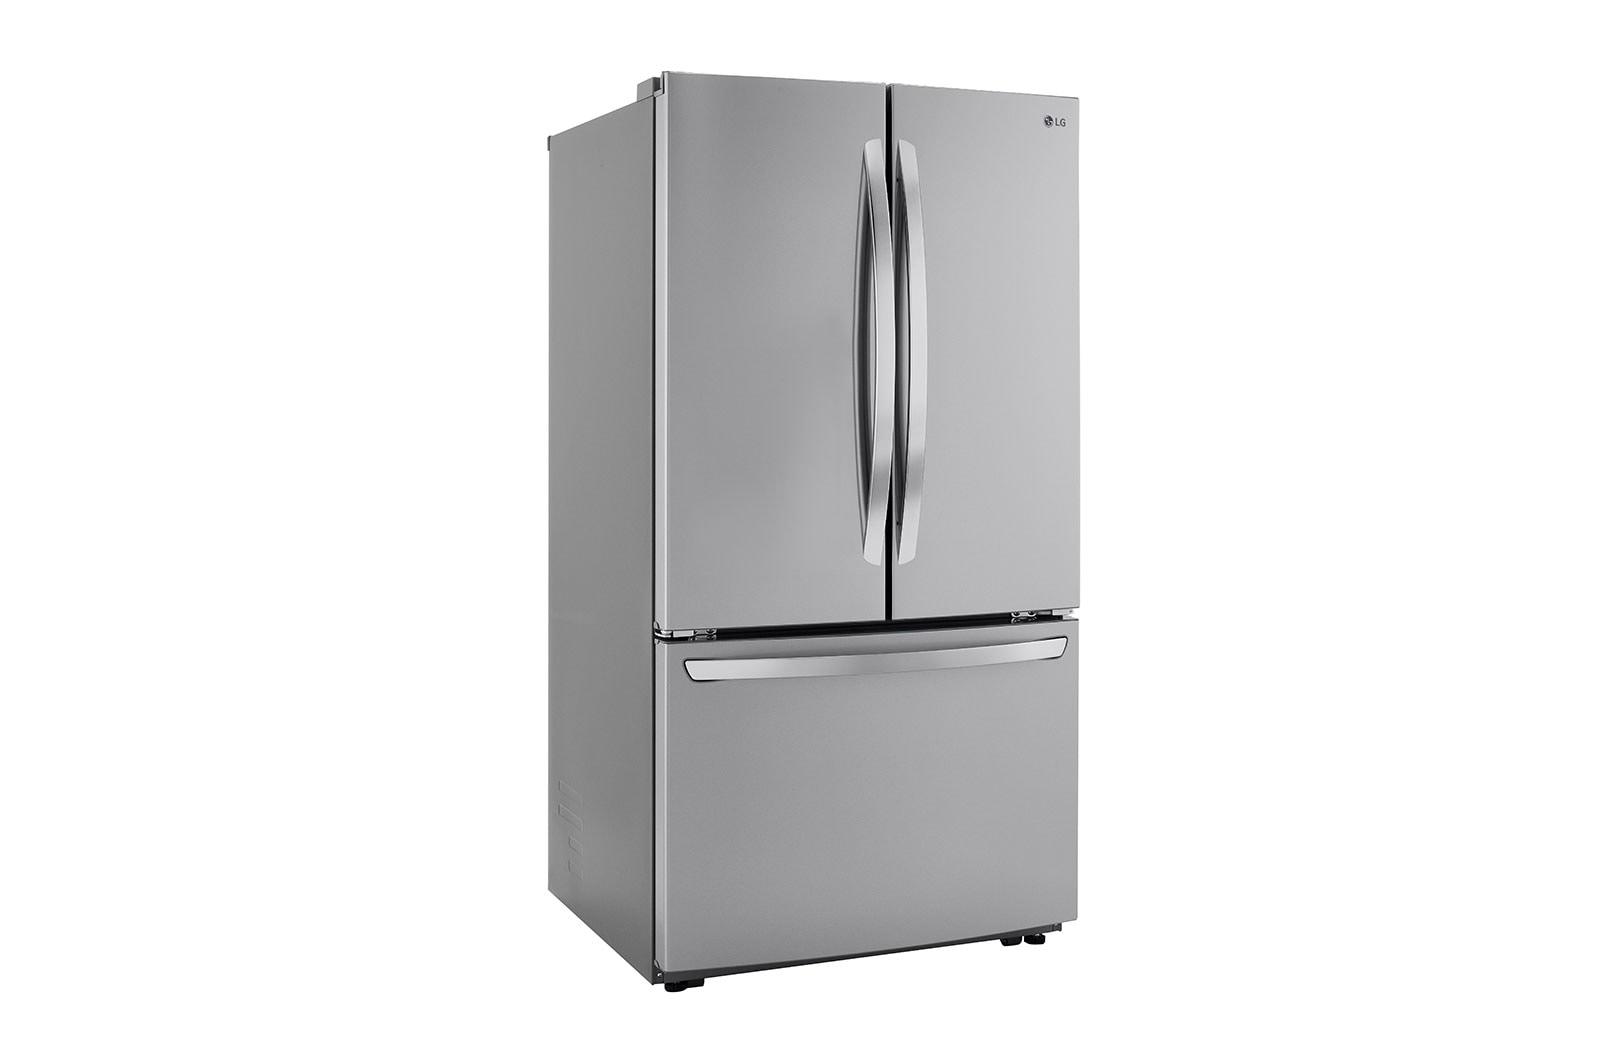 Lg 29 cu. ft. Smart French Door Refrigerator